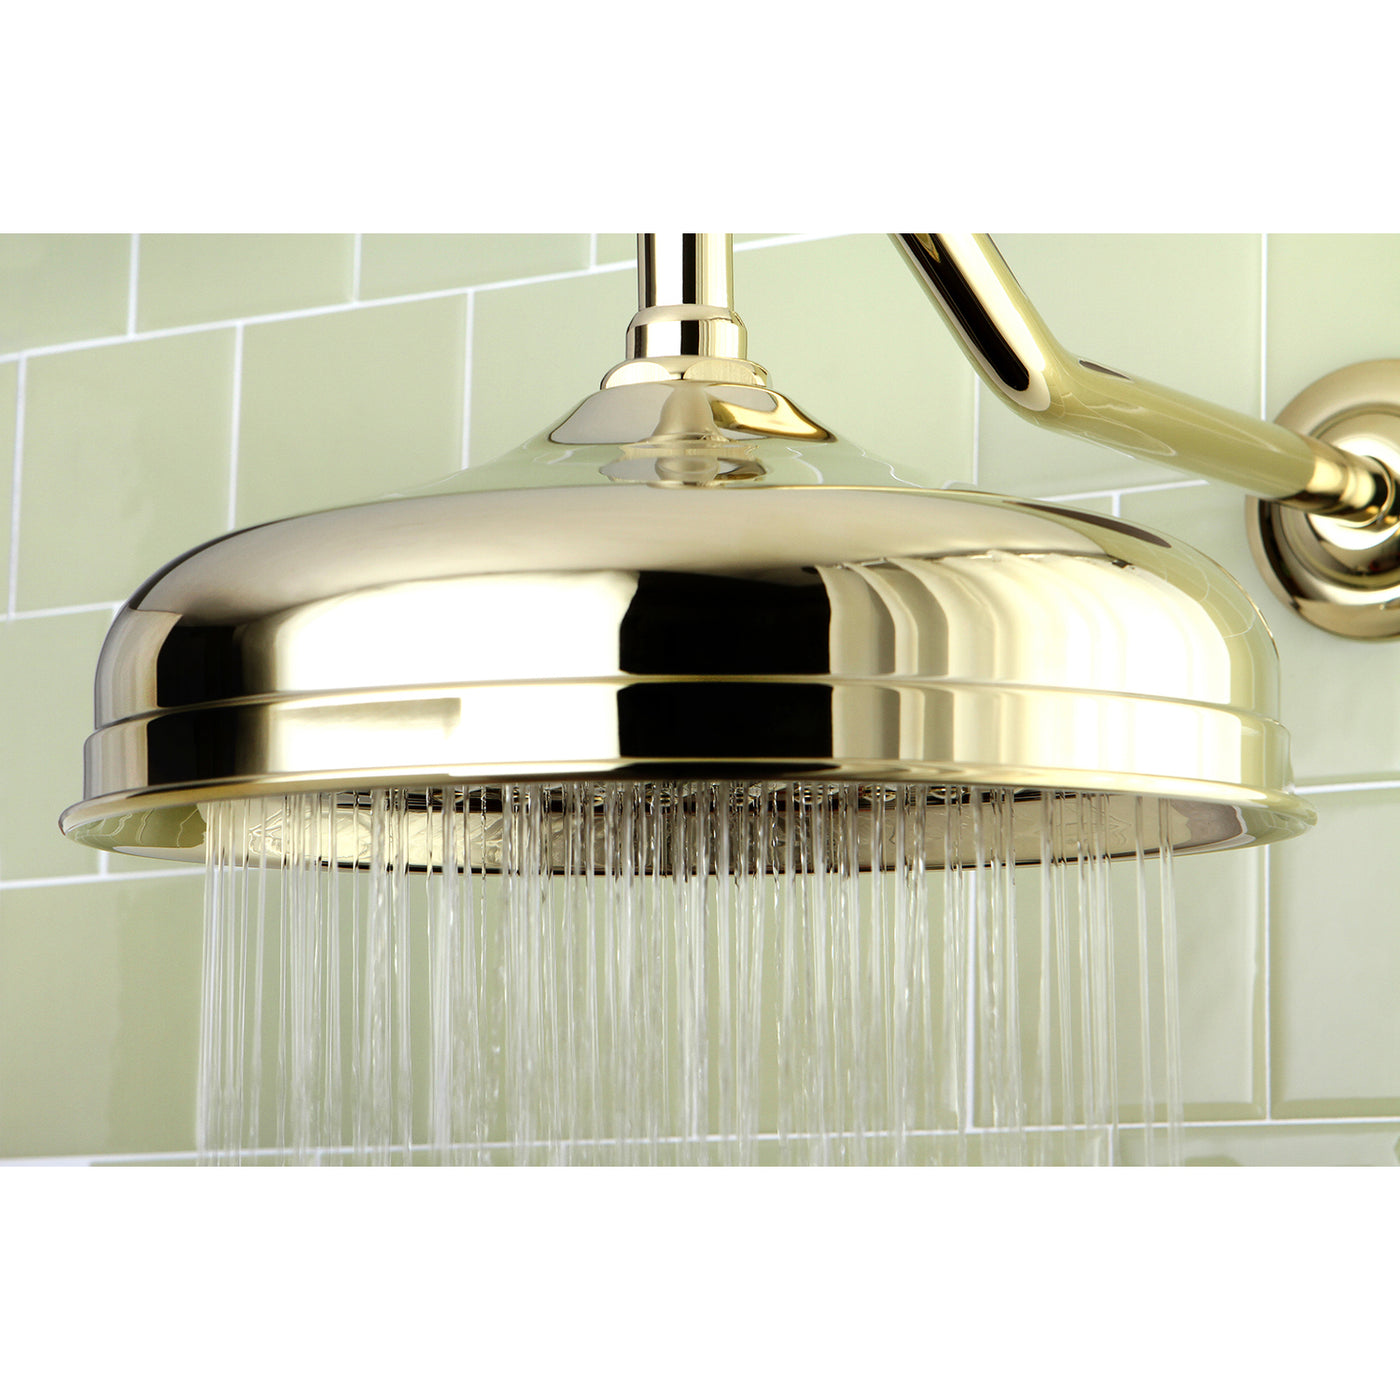 Elements of Design DK1252 10-Inch Raindrop Shower Head, Polished Brass